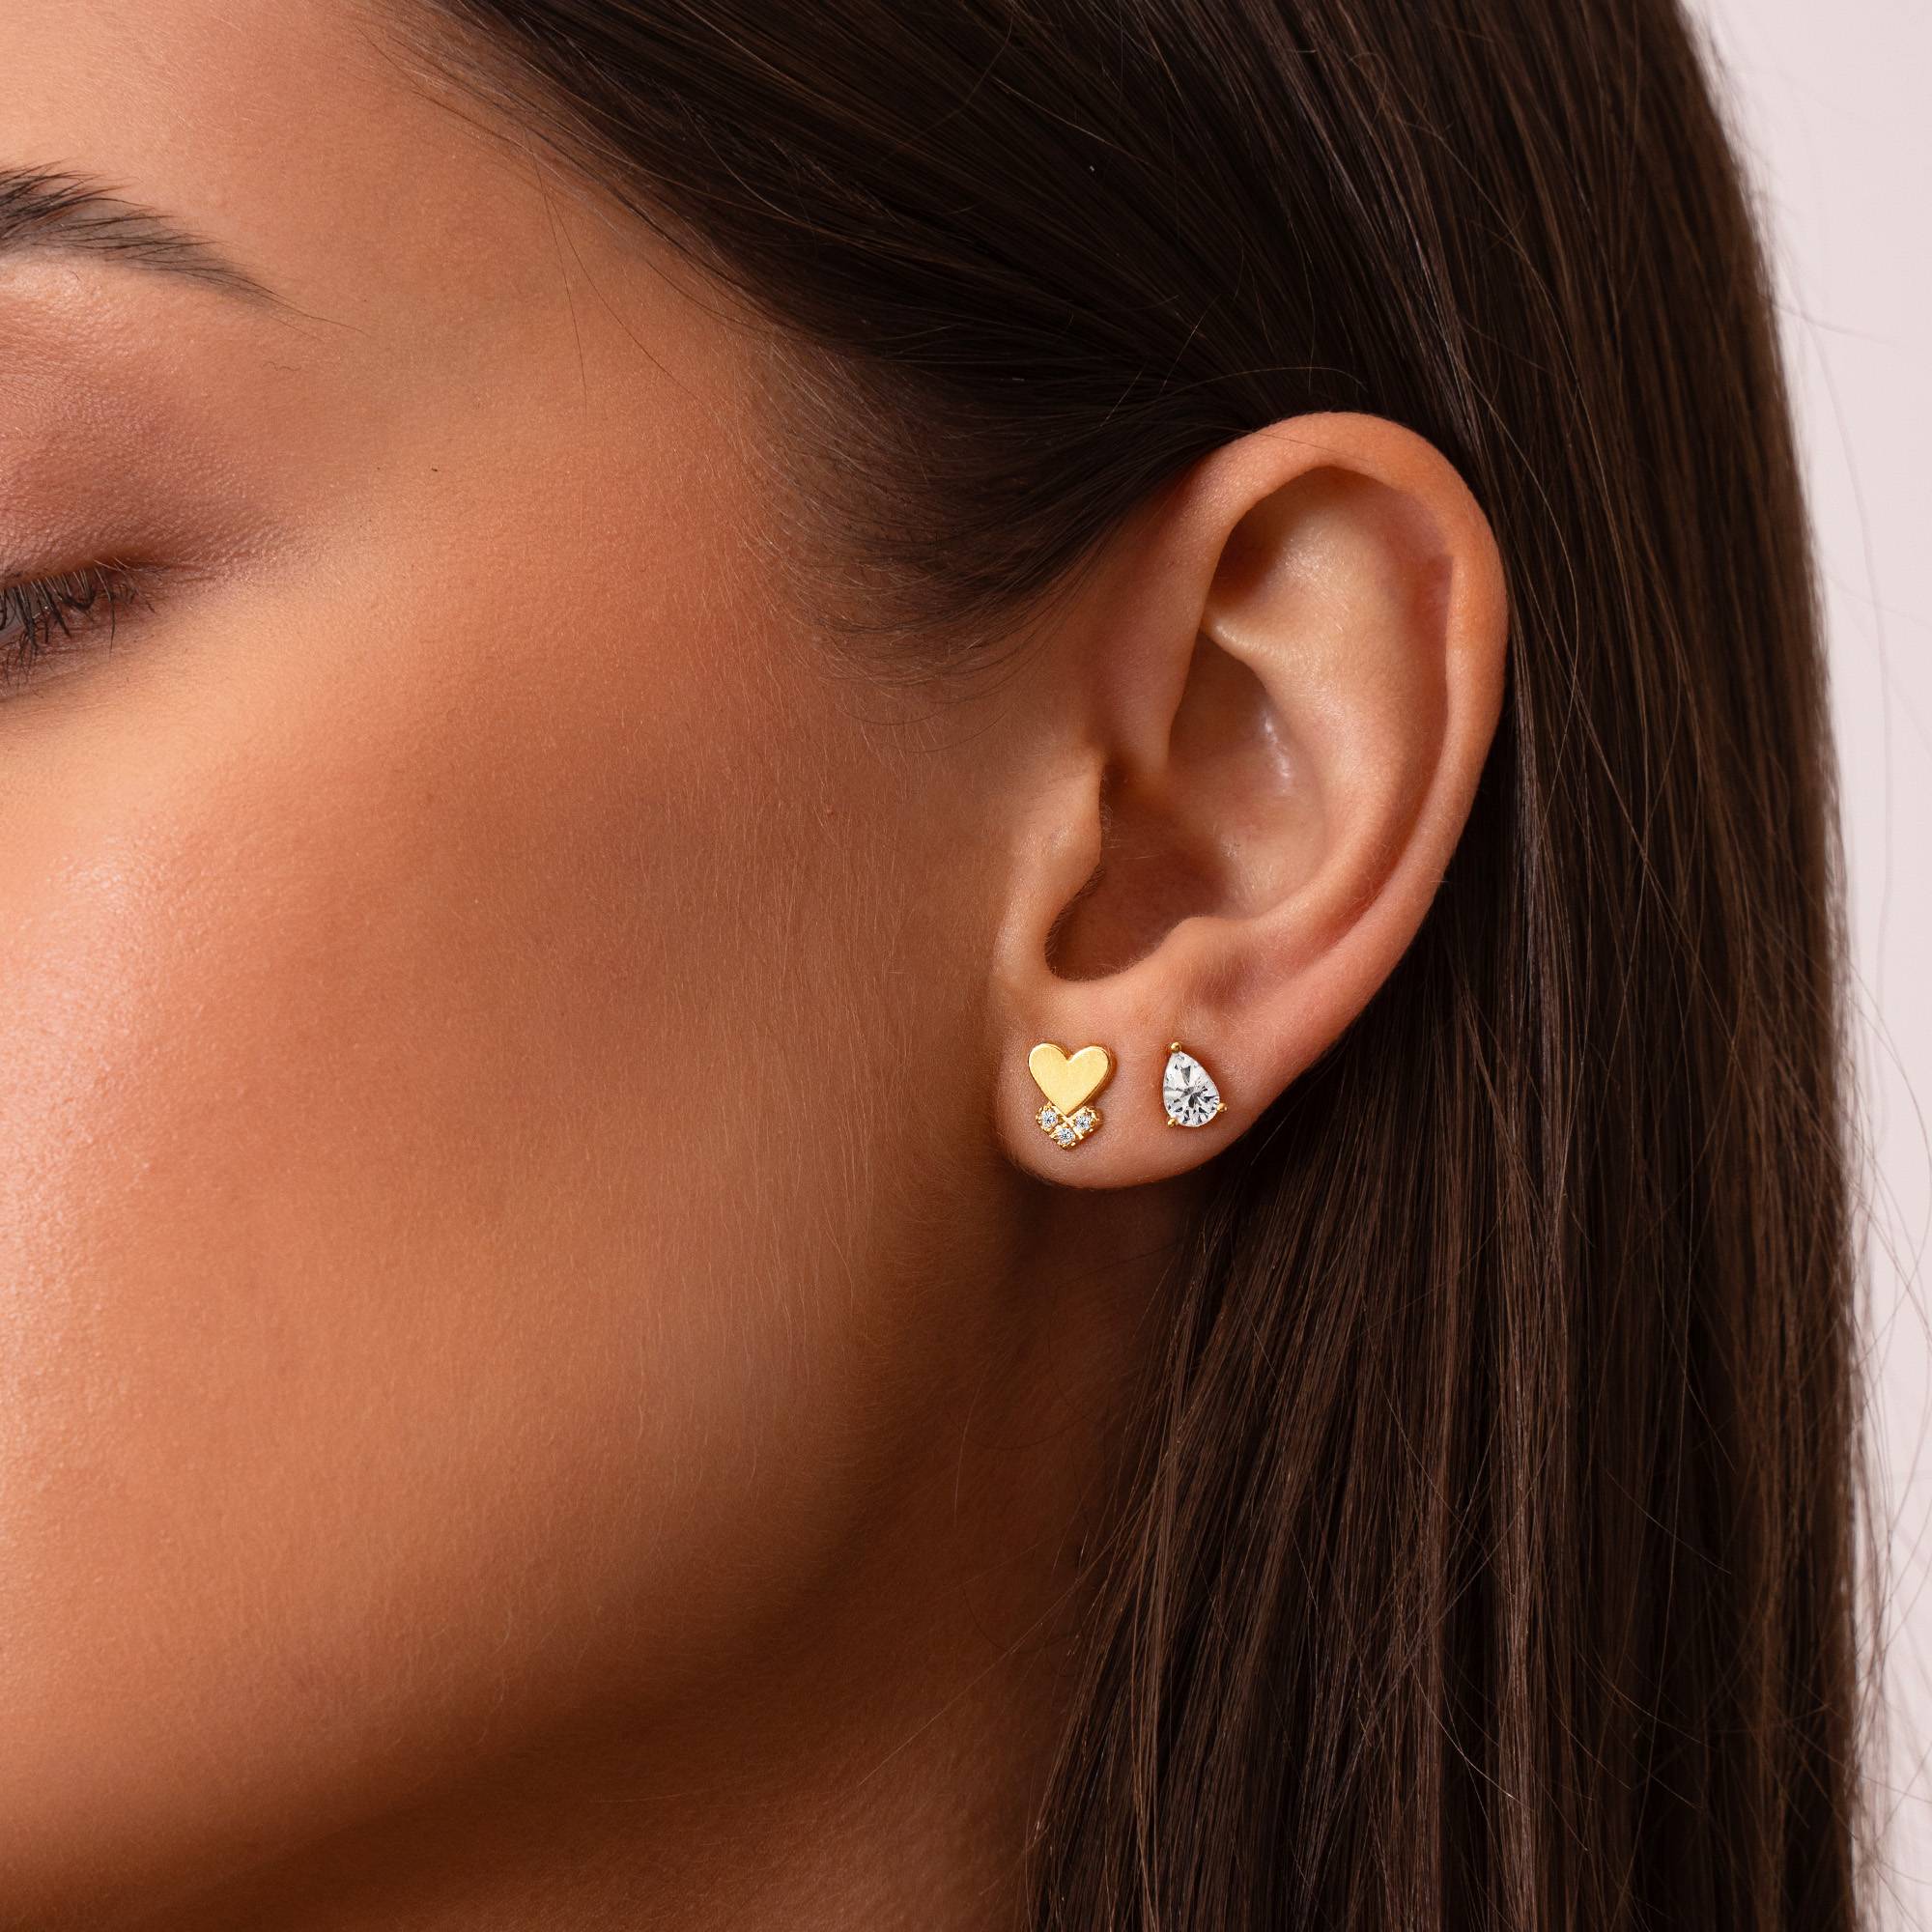 Dakota Heart Earrings with Diamonds in 18K Gold Plating-5 product photo